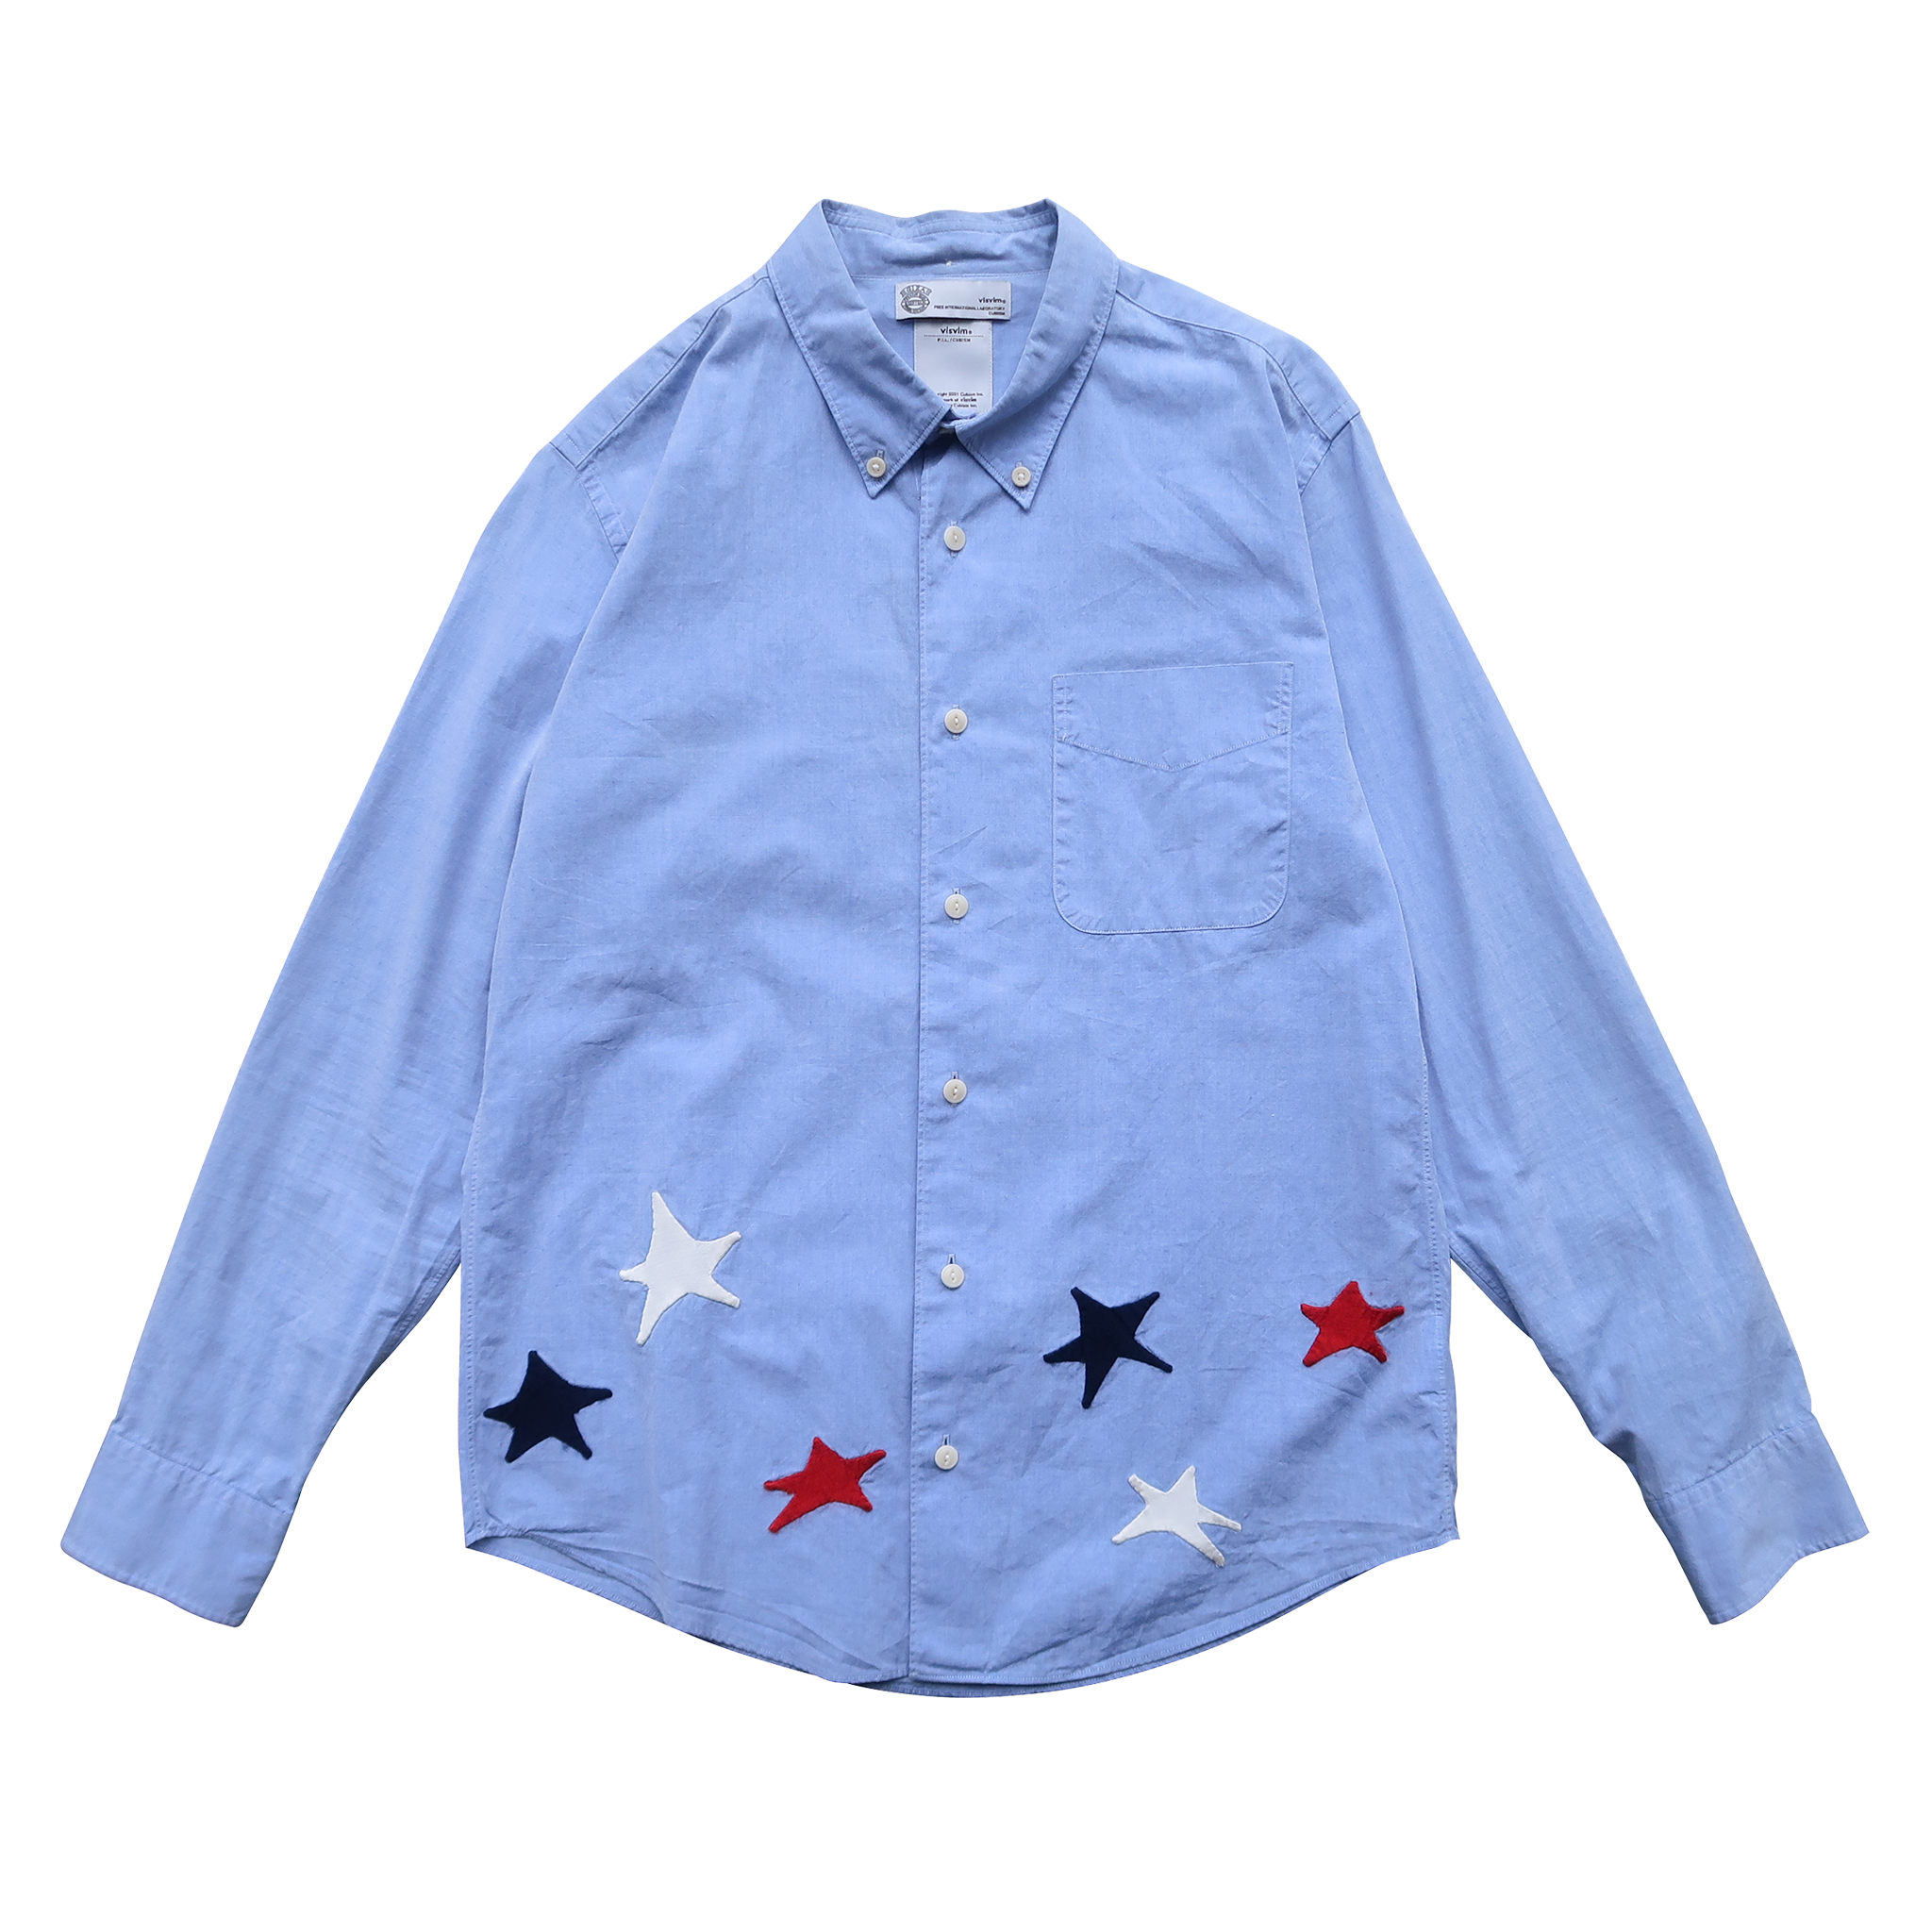 visvim – Lungta Stars Shirt (SS 2015) – Vanitasism